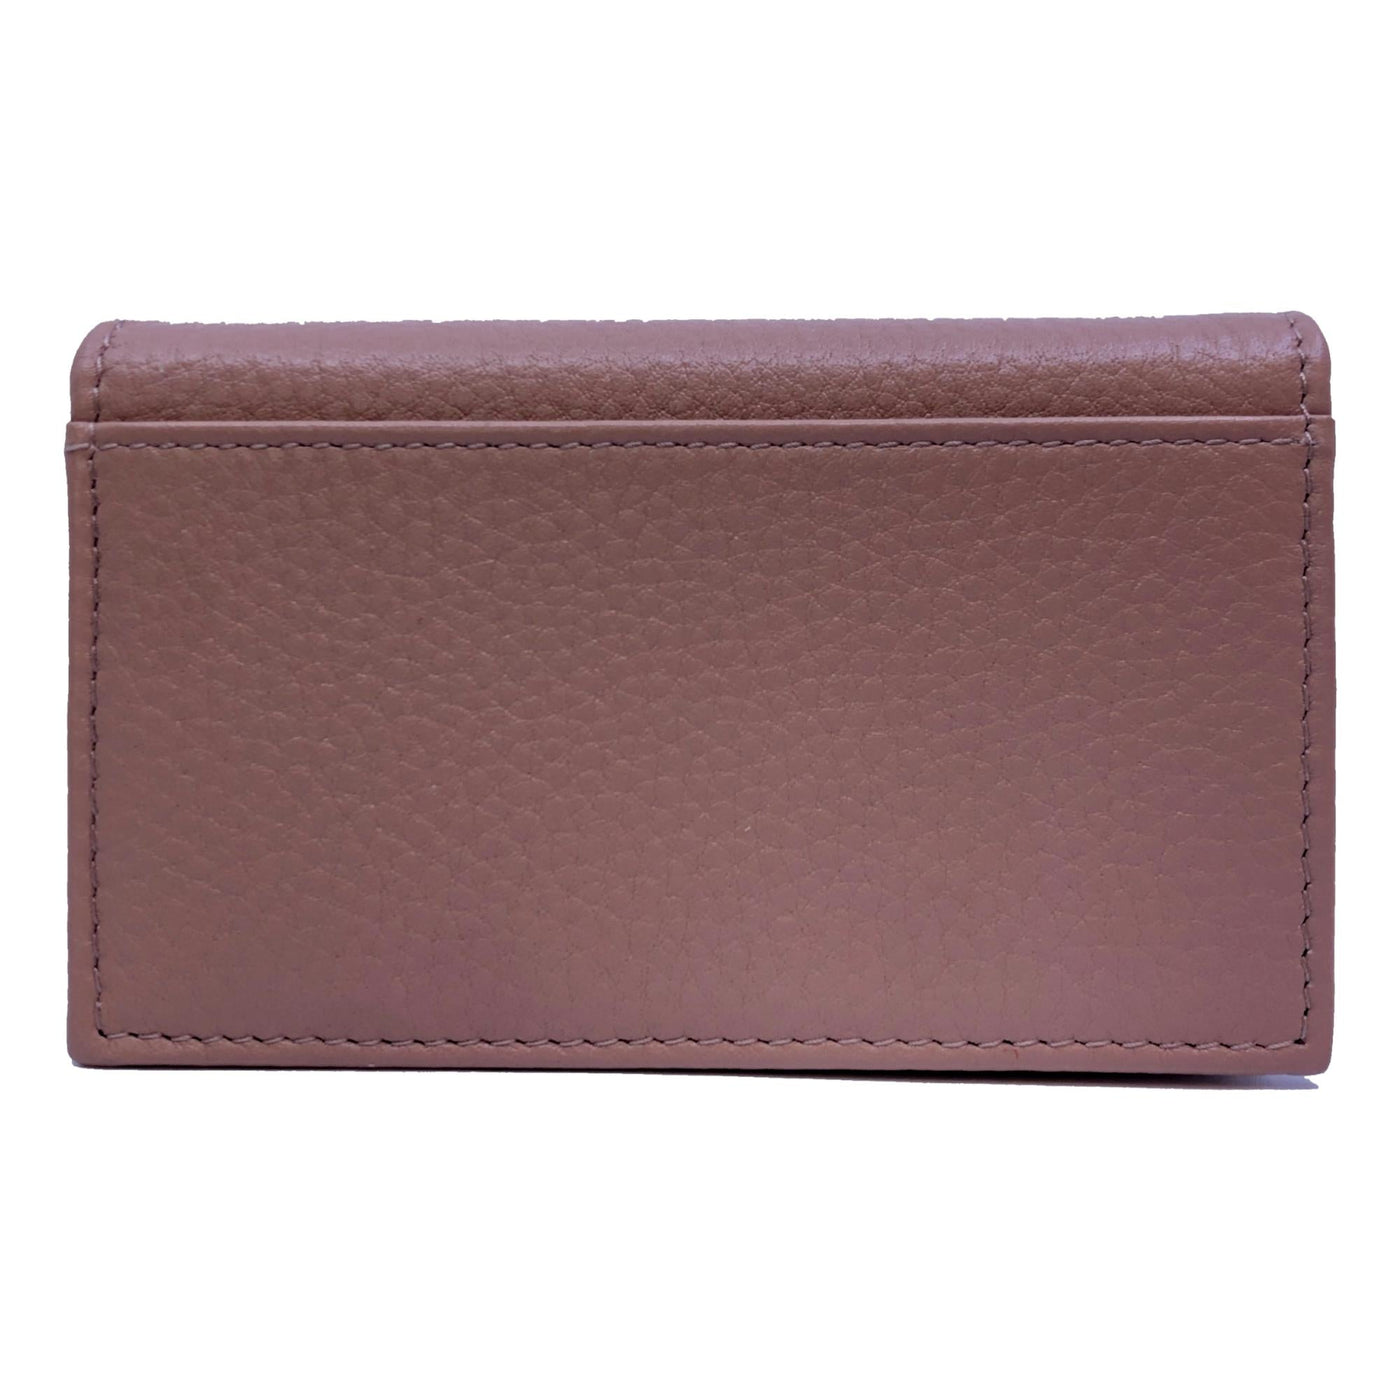 Prada Women's Vitello Grain Cipria Beige Leather Card Case Wallet 1MC122 - LUXURYMRKT